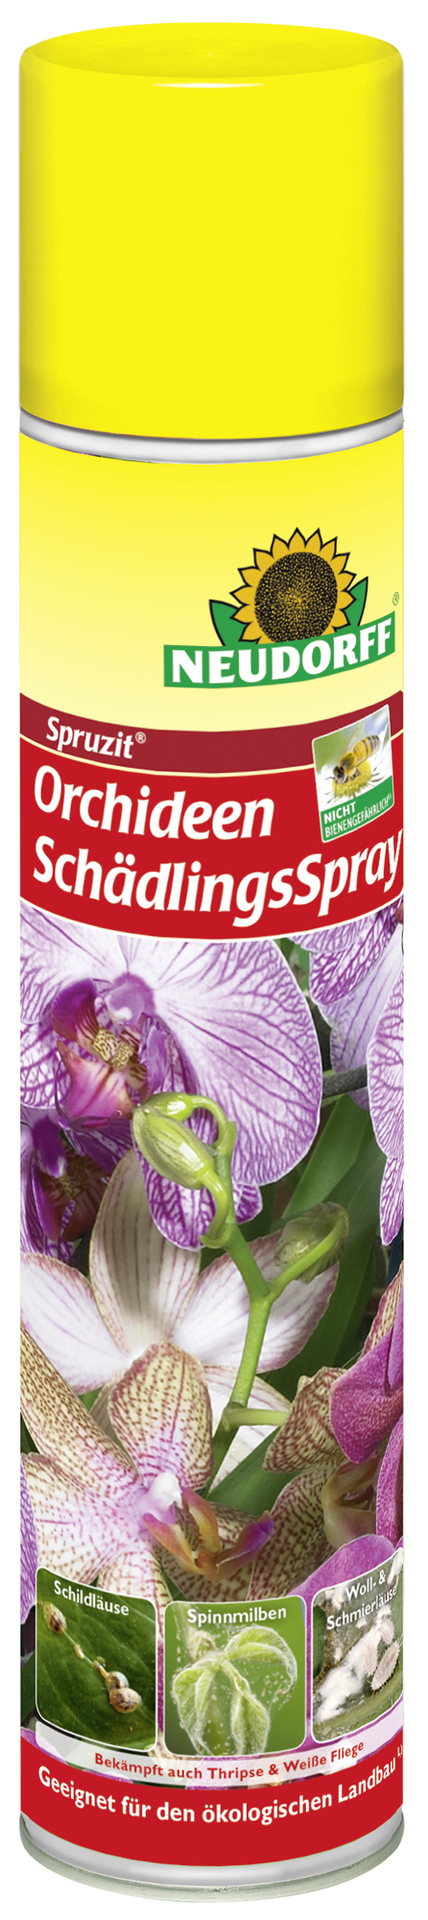 W. Neudorff GmbH KG Spruzit Orchideen Schädlingsspray